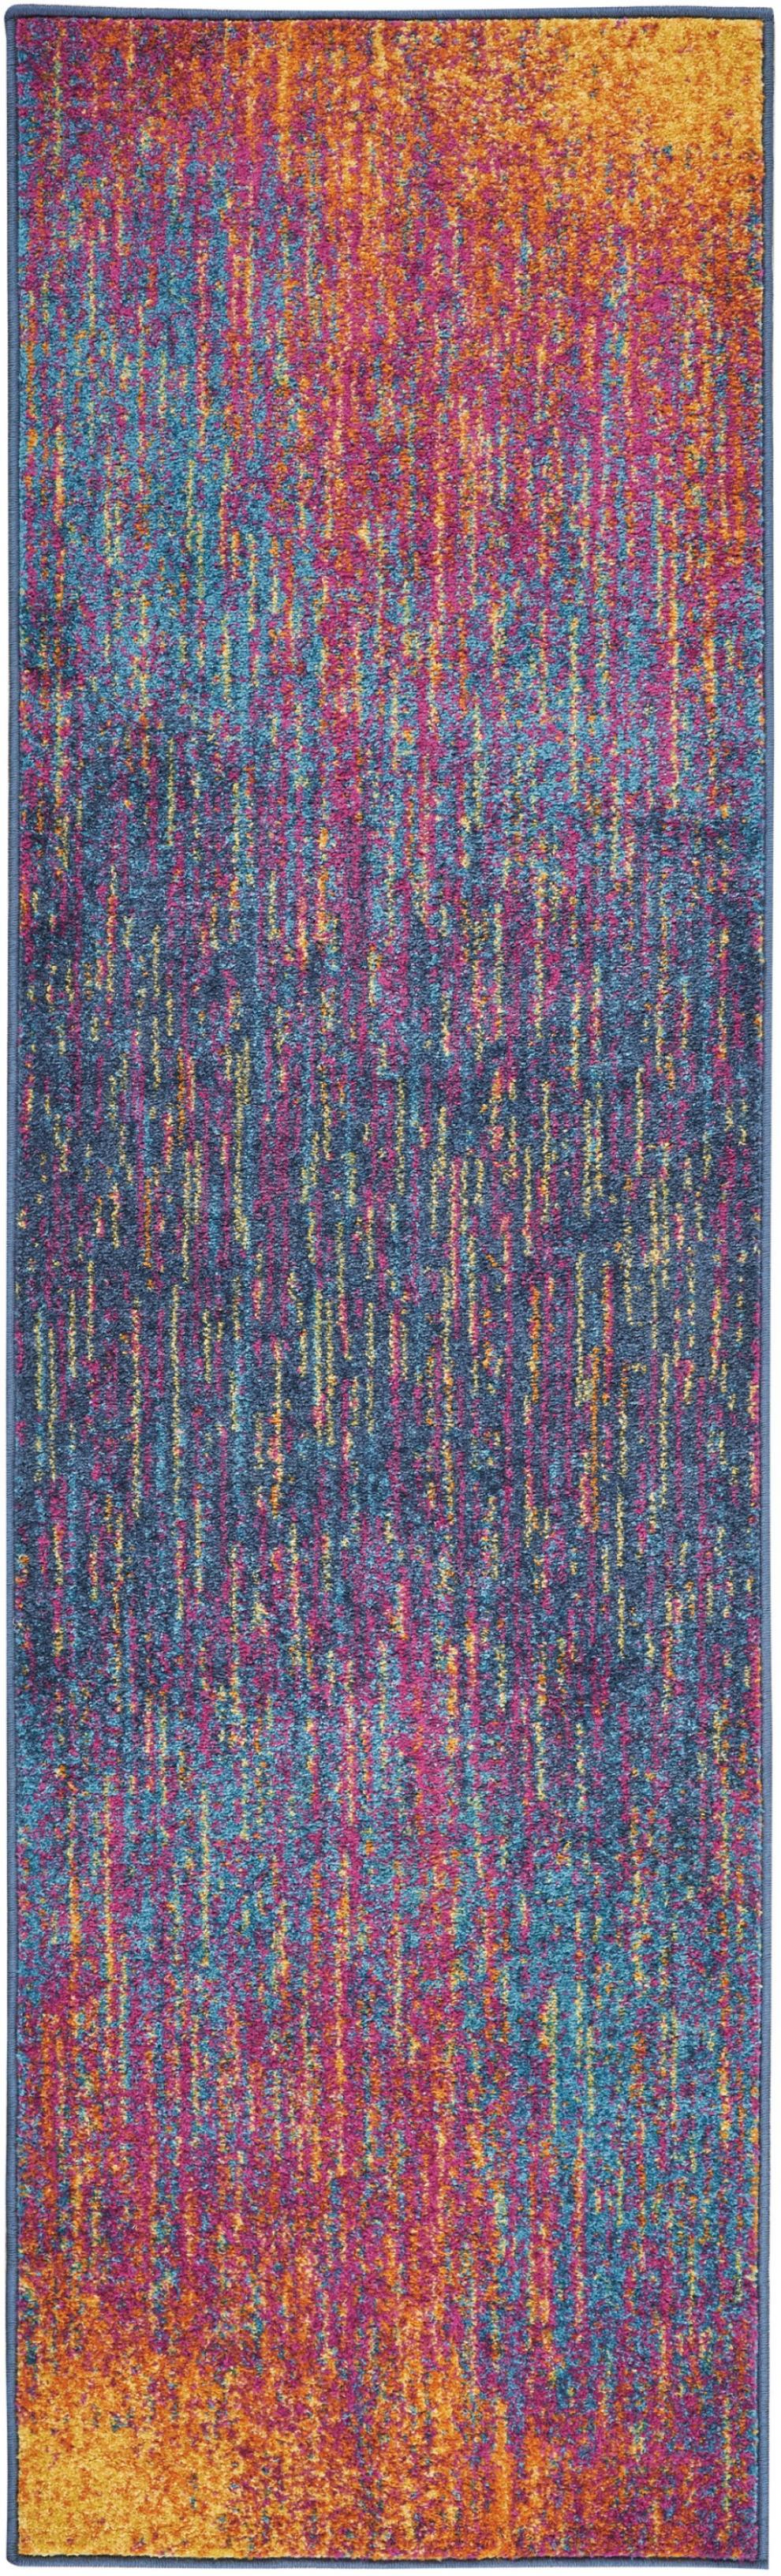 2’ x 10’ Rainbow Abstract Striations Runner Rug